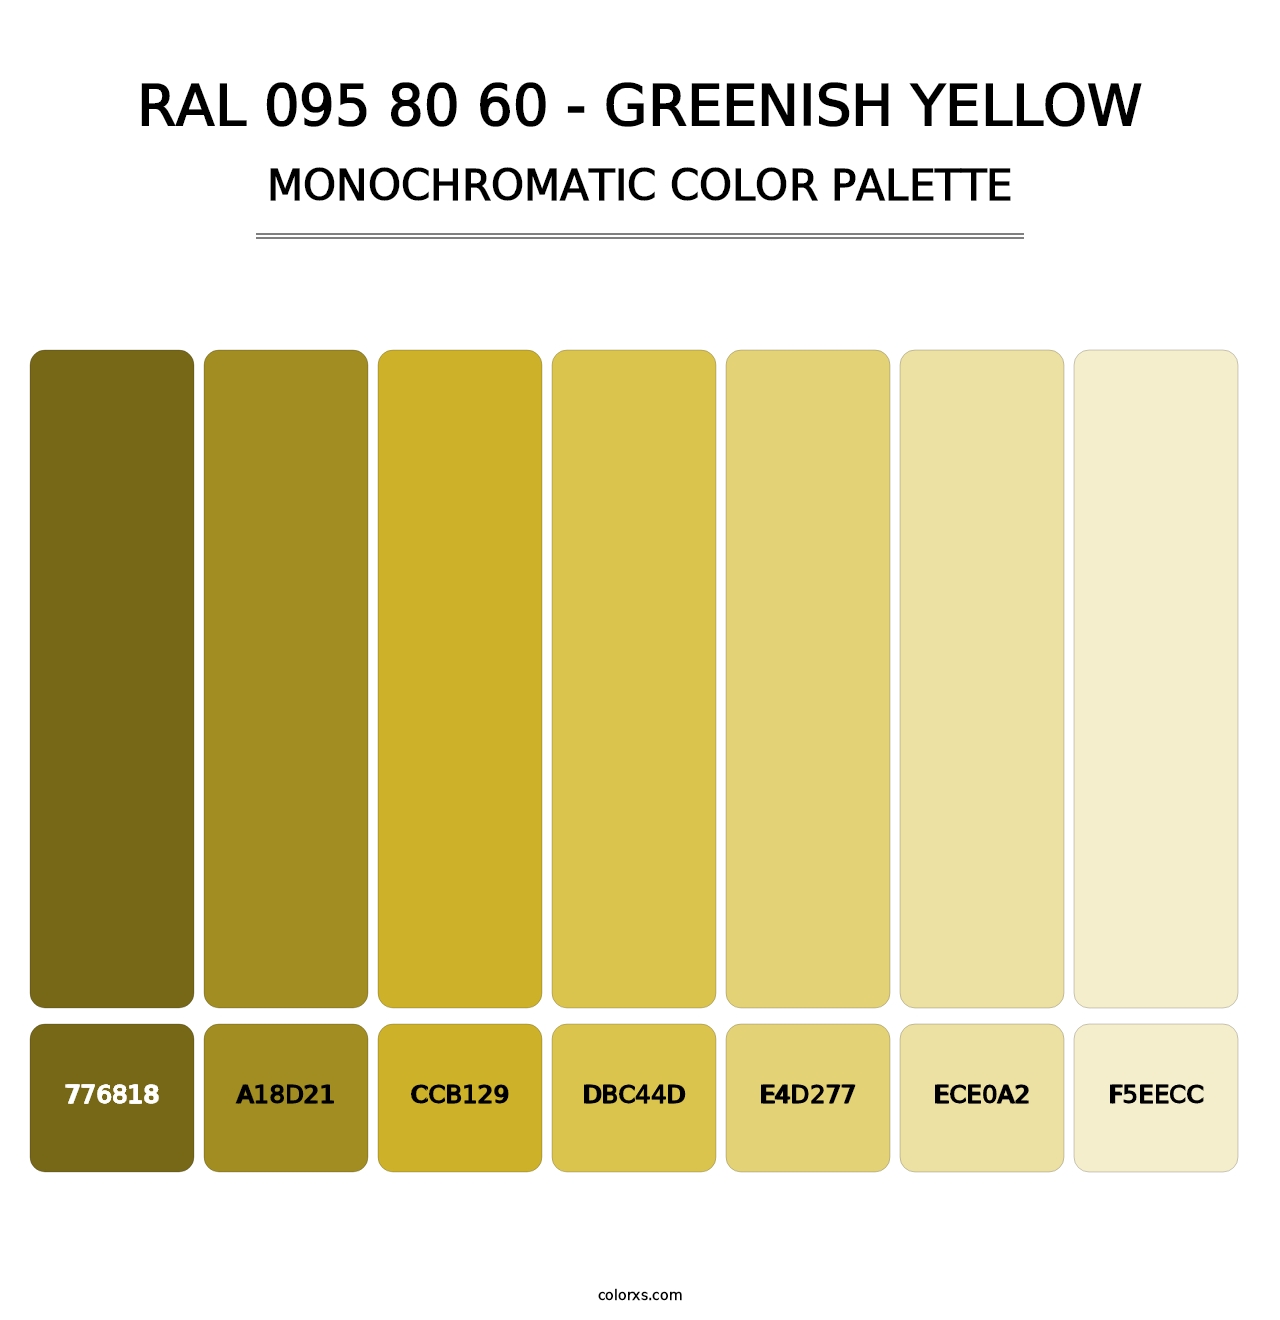 RAL 095 80 60 - Greenish Yellow - Monochromatic Color Palette